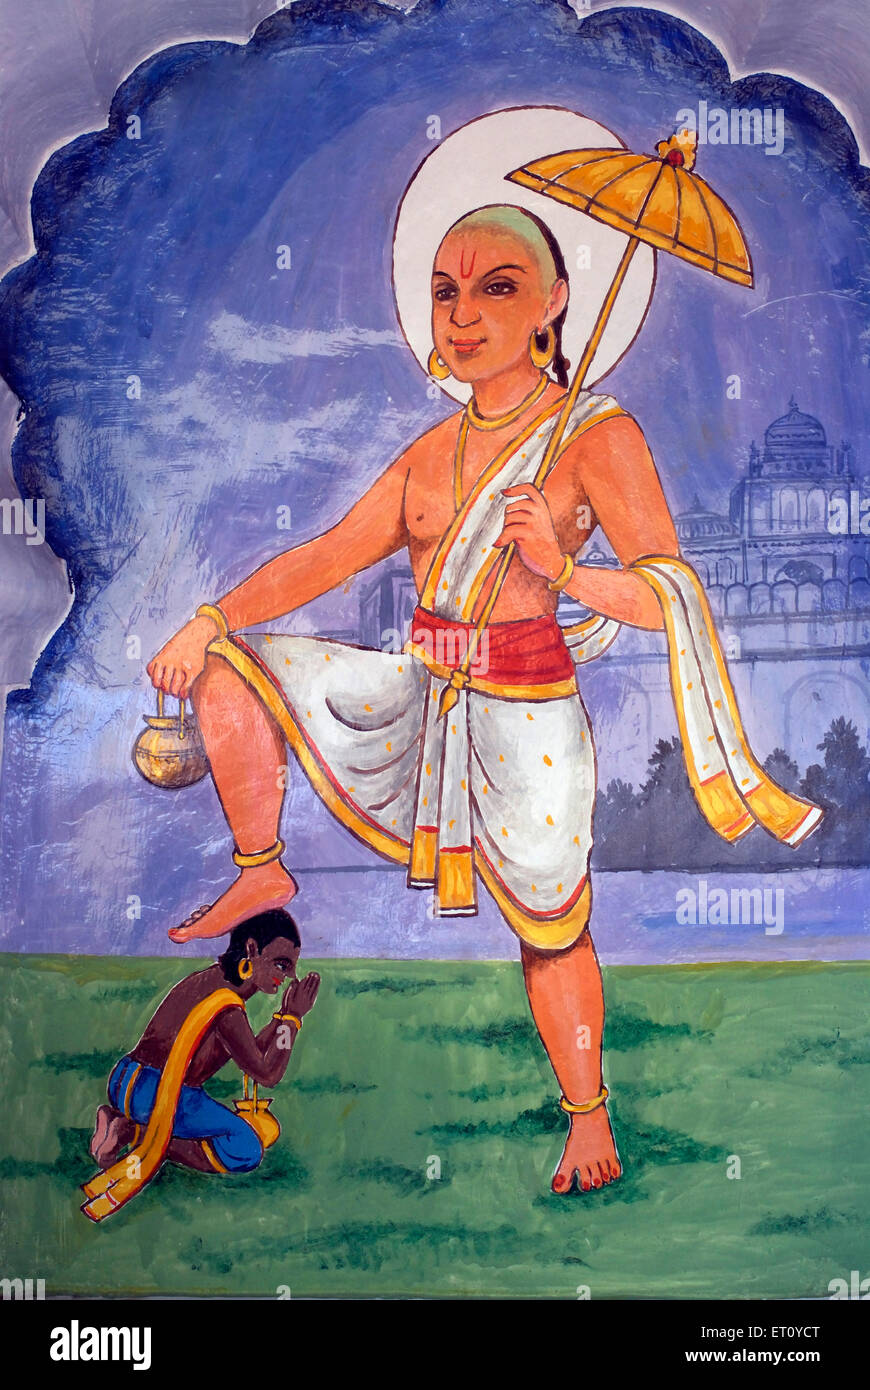 Vamanavtar or Dwarf fifth incarnation of Lord Vishnu colourfully ...